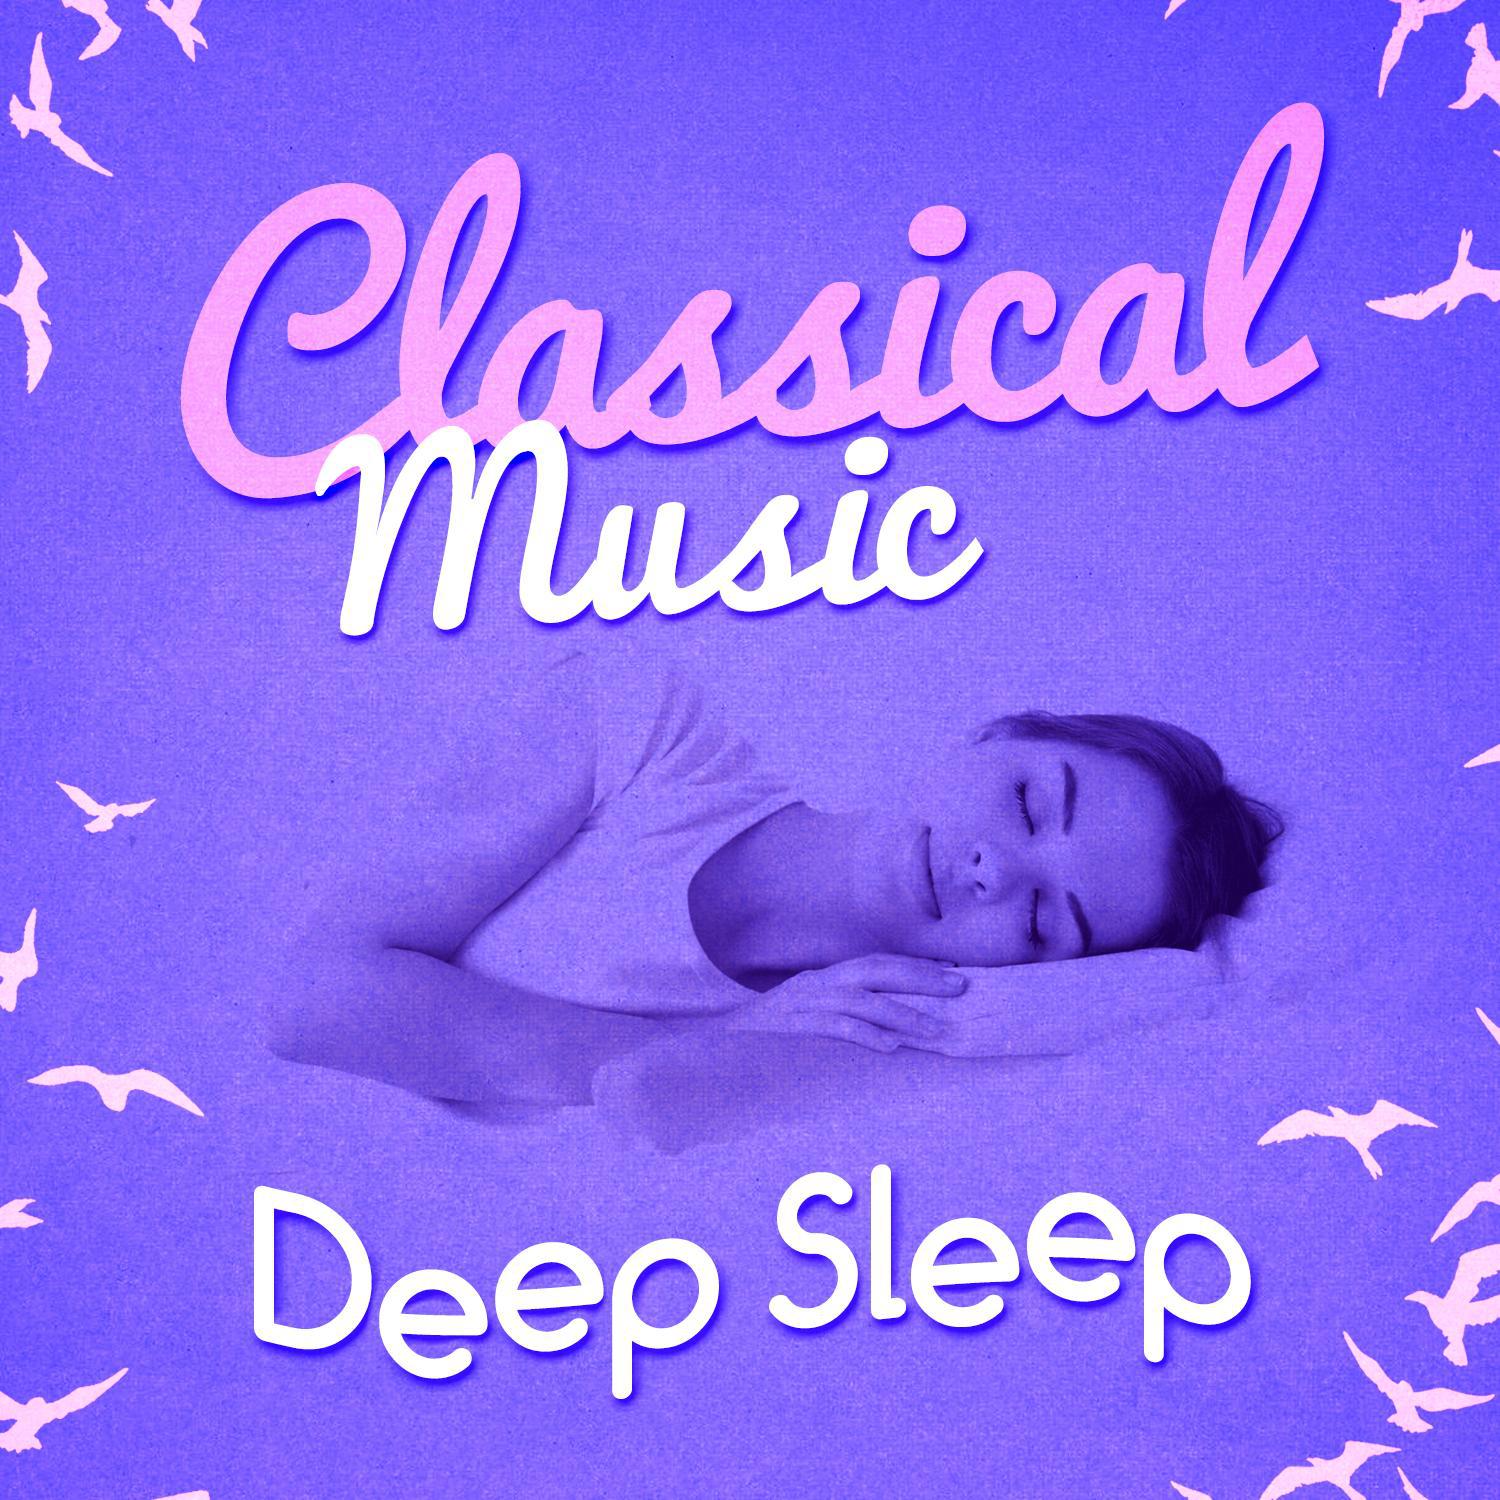 Classical Music for Deep Sleep